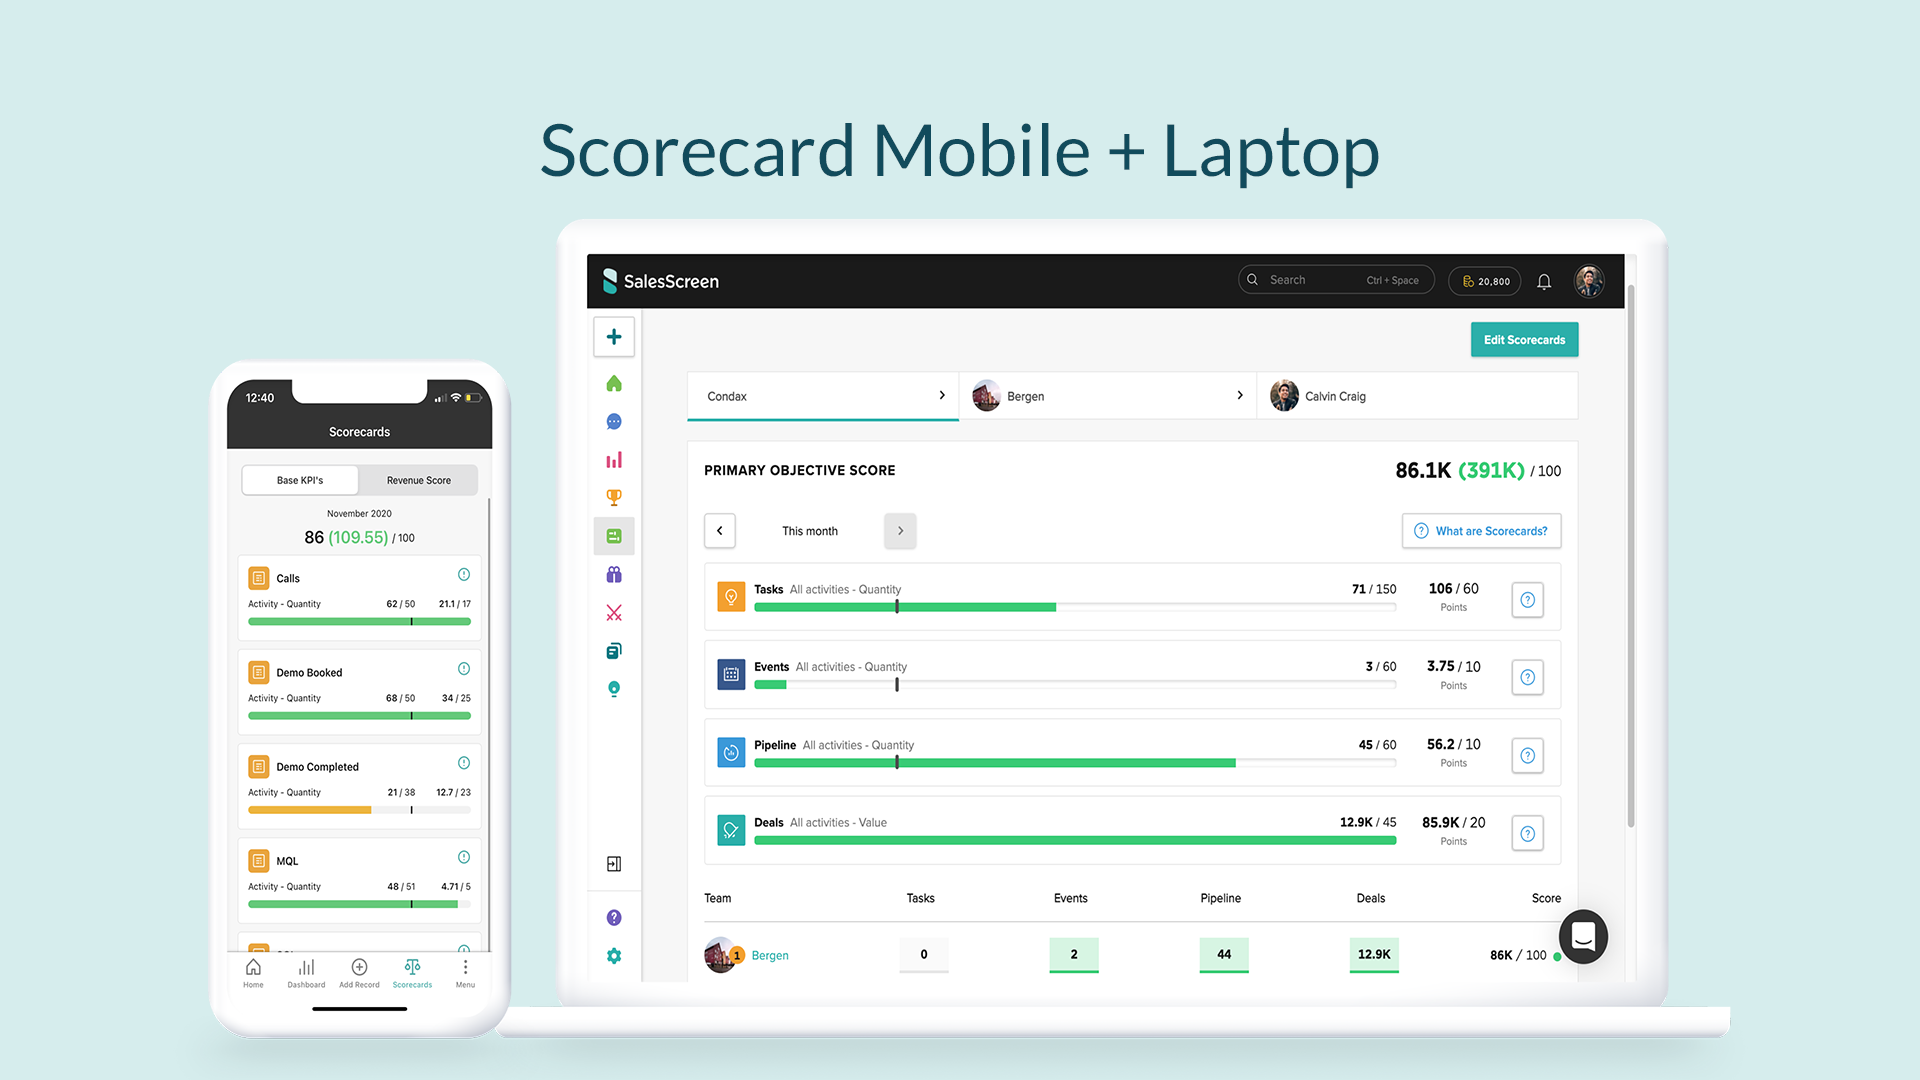 Scorecard Mobile + Laptop